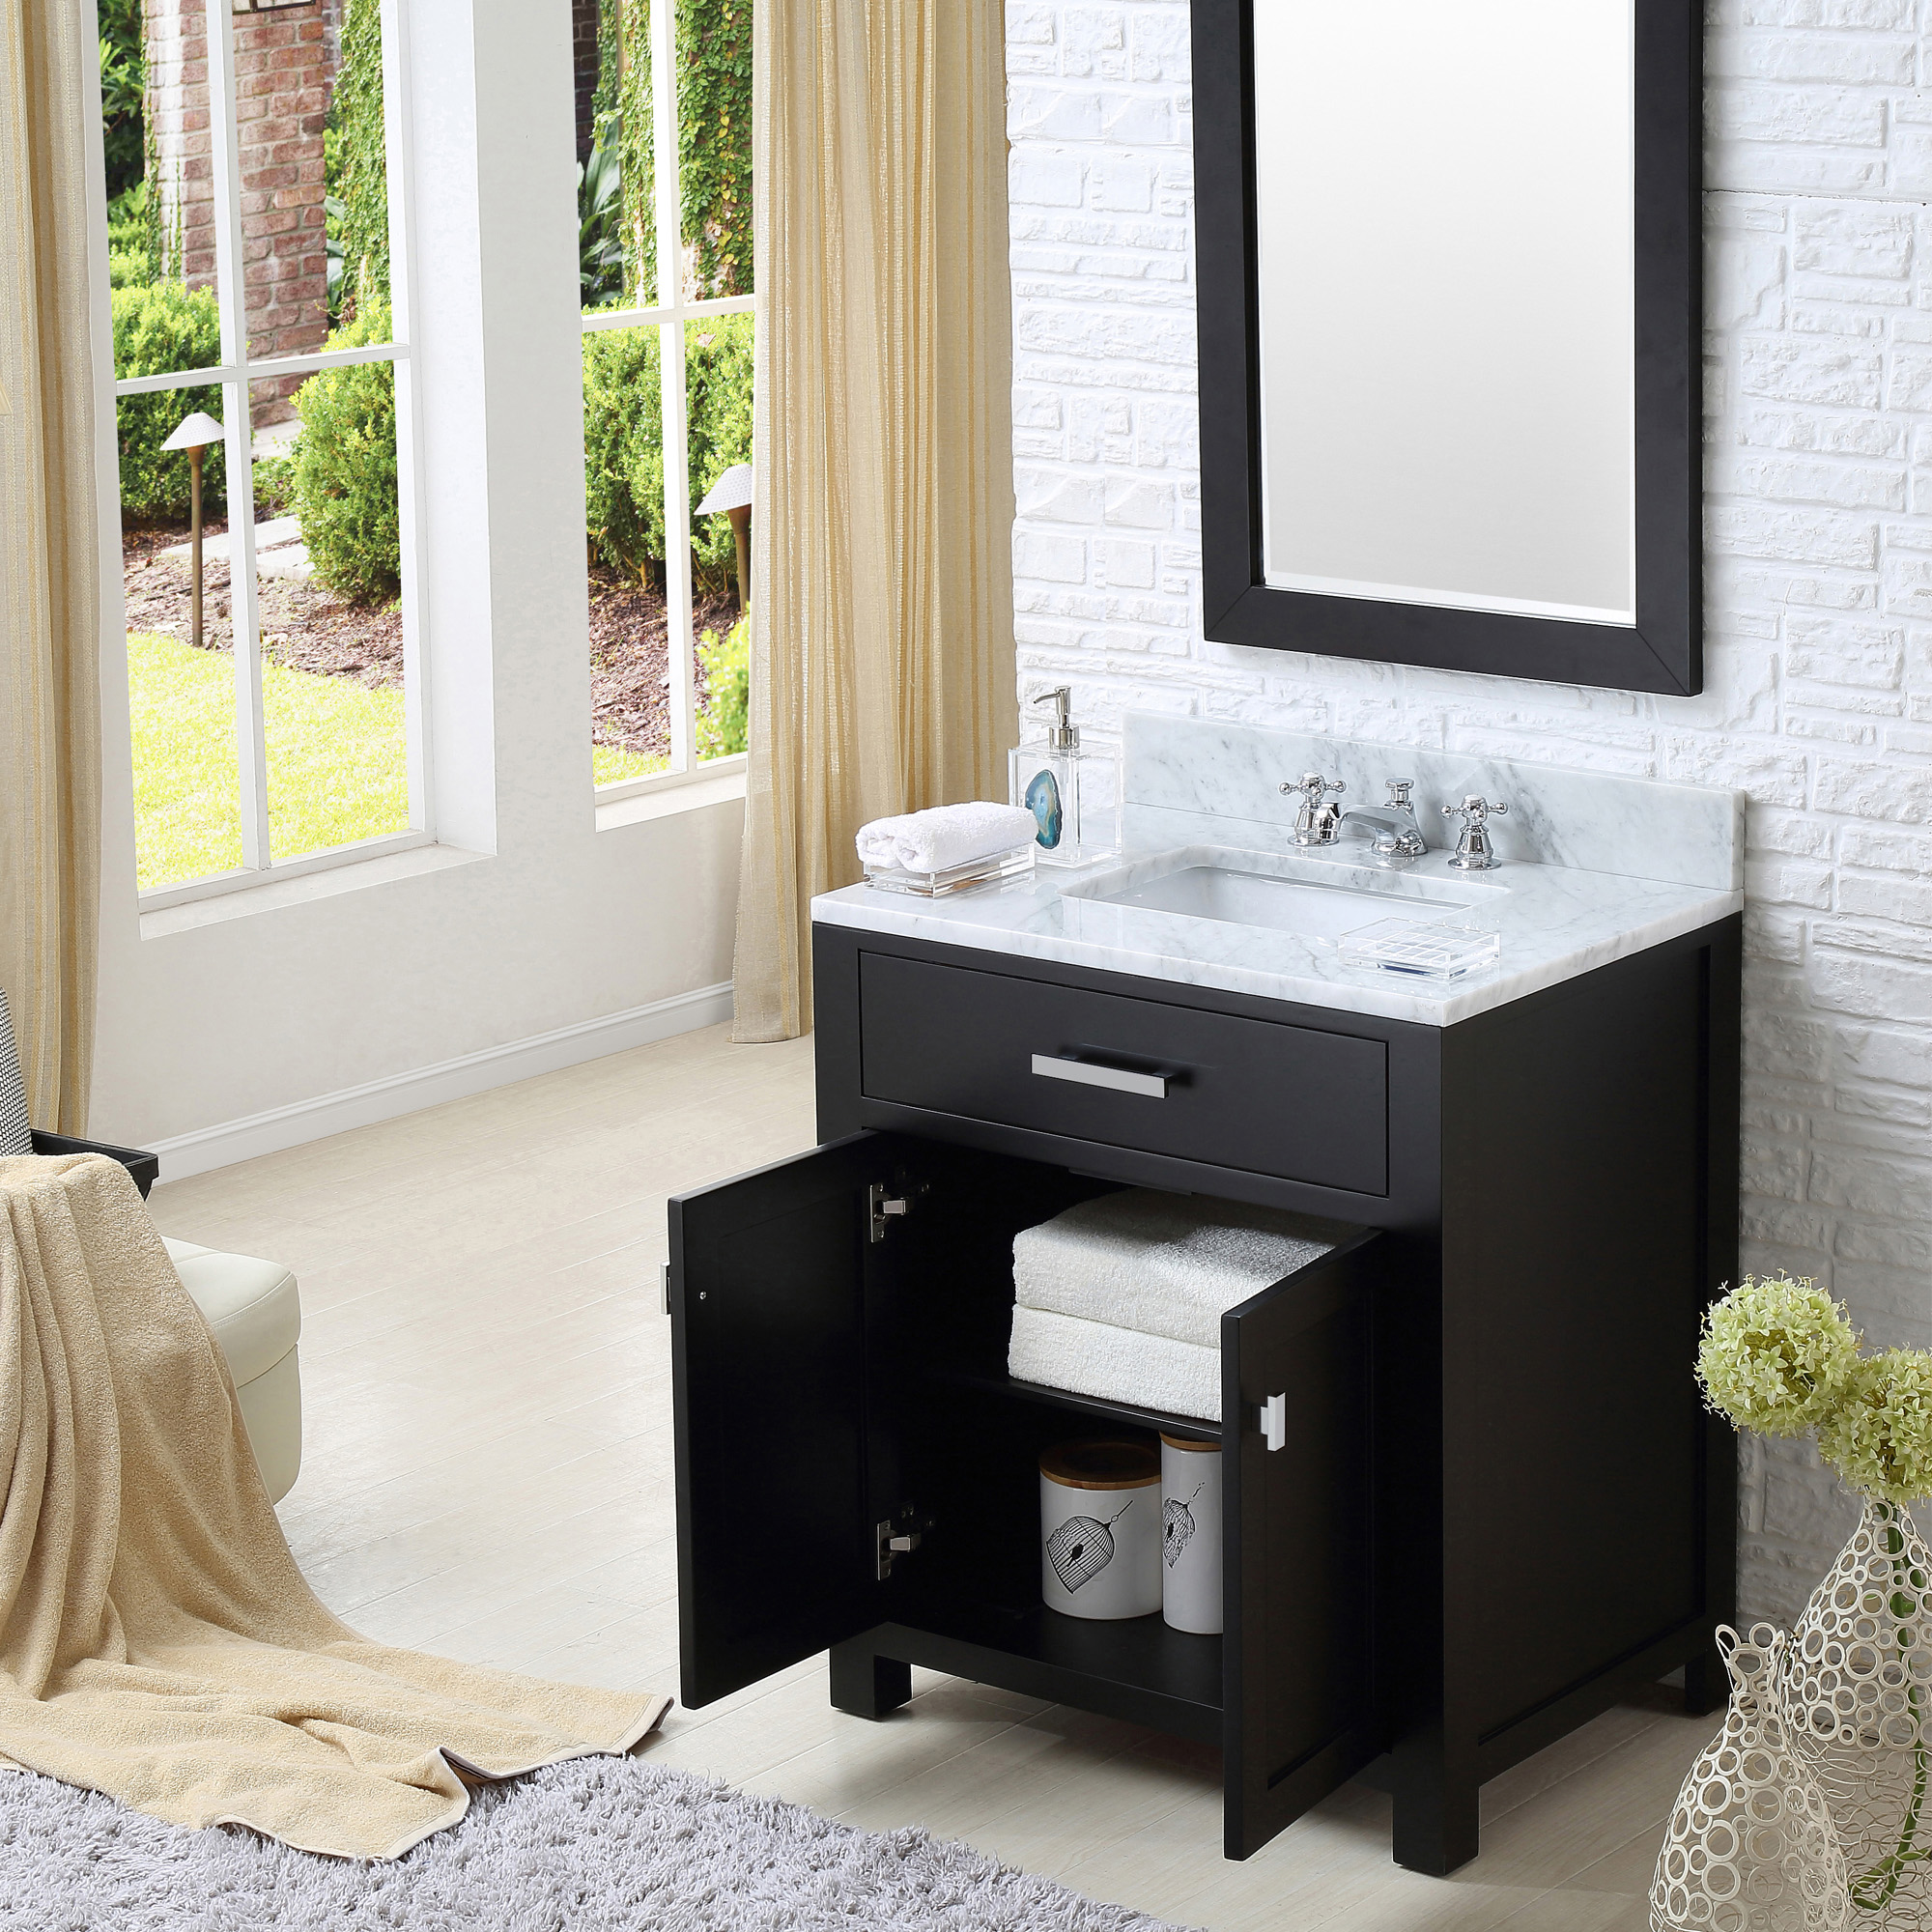 What Is The Best Bathroom Vanity Top Material - Best Design Idea